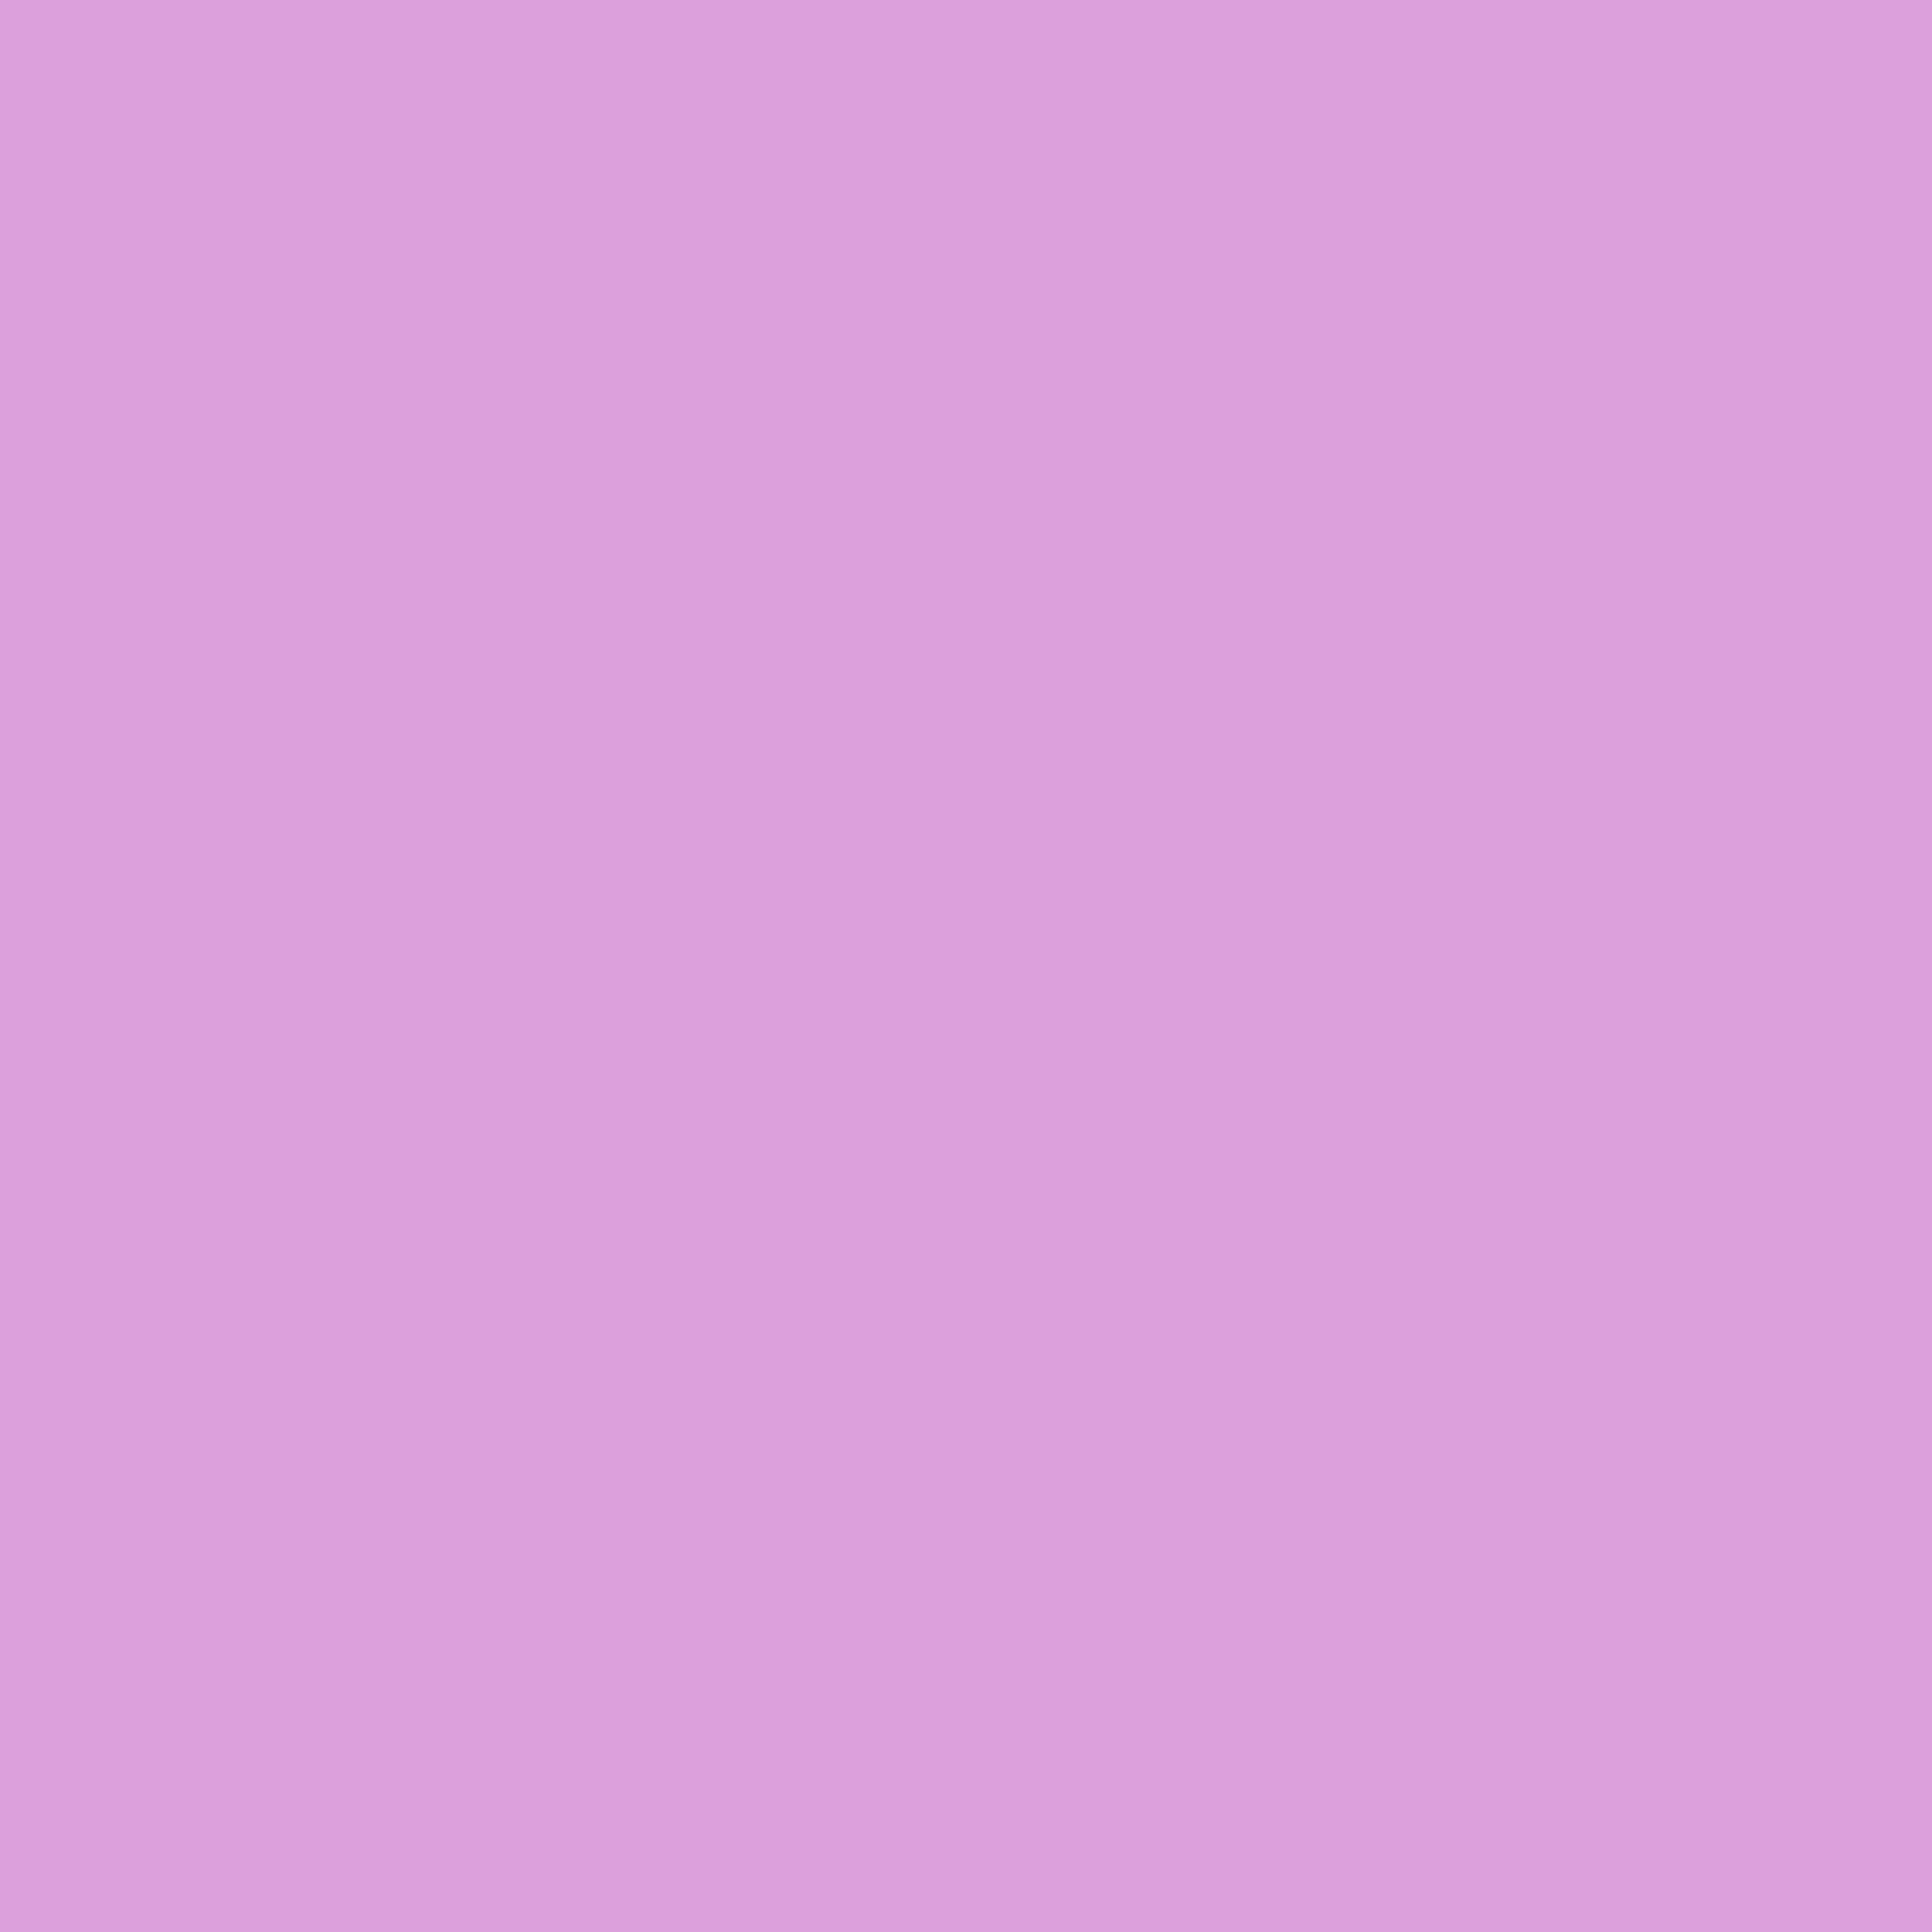 2732x2732 Medium Lavender Magenta Solid Color Background